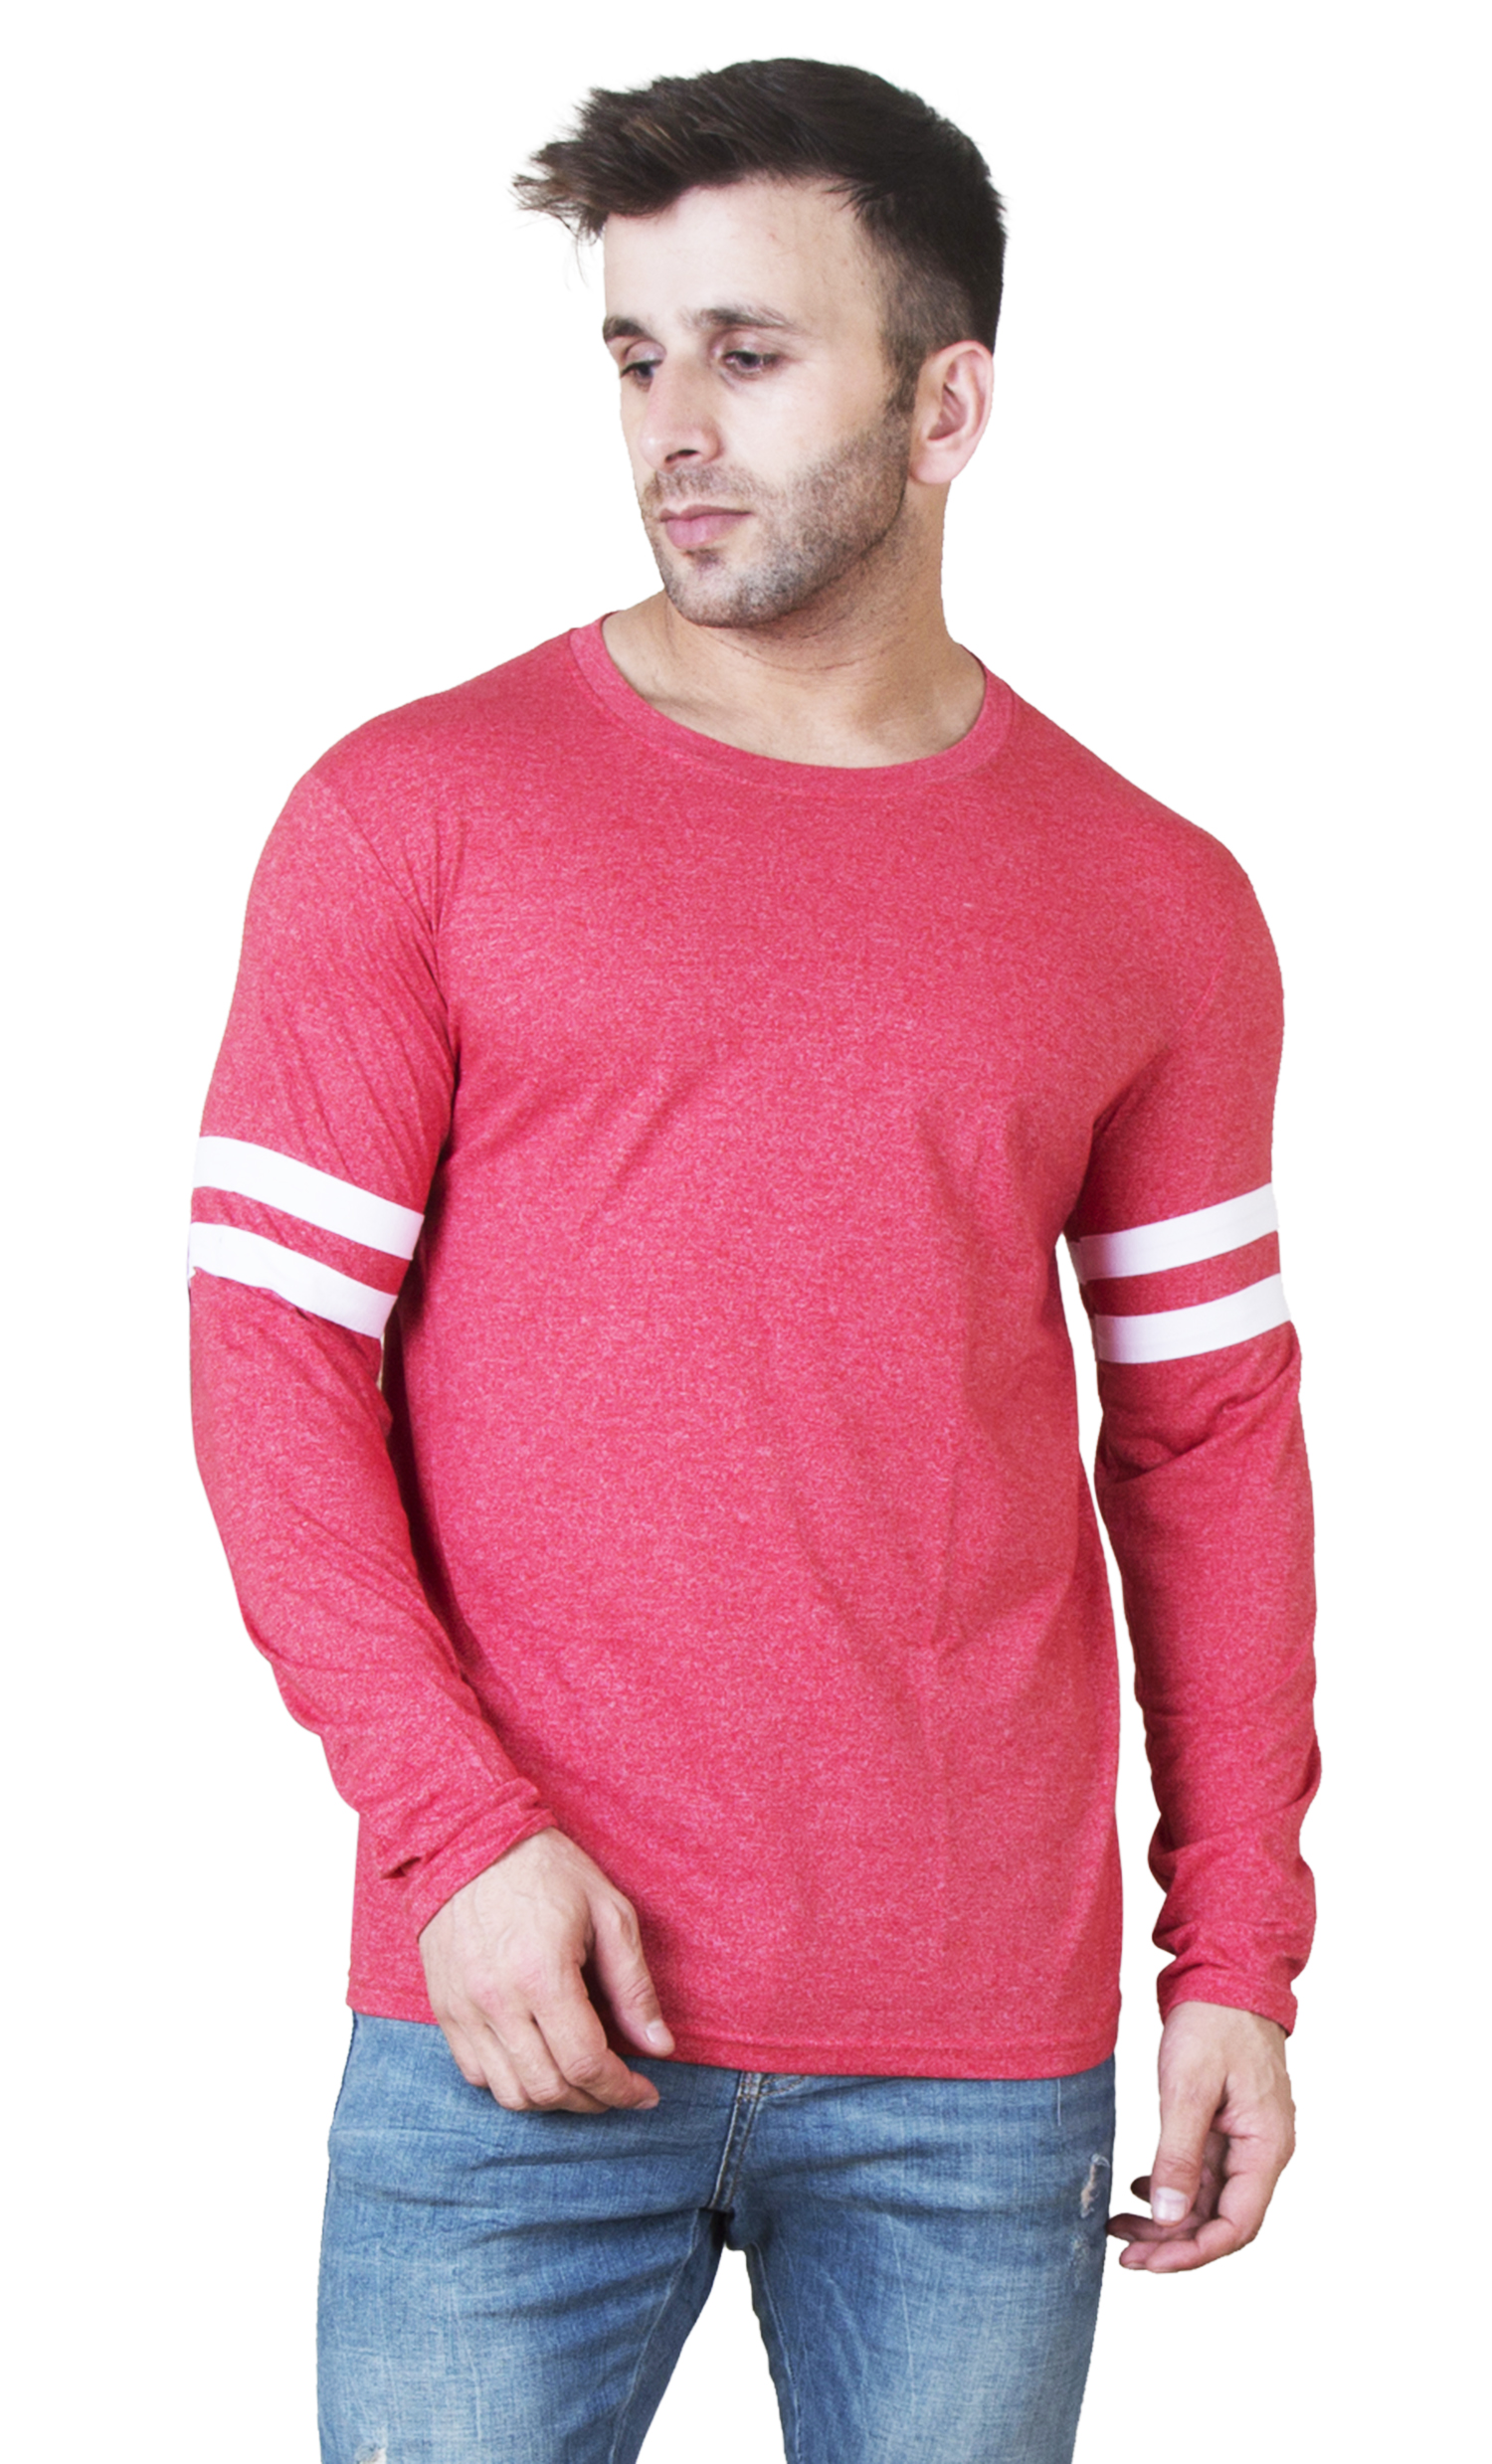 Buy Tshirts for Men (Veirdo) Online @ ₹369 from ShopClues